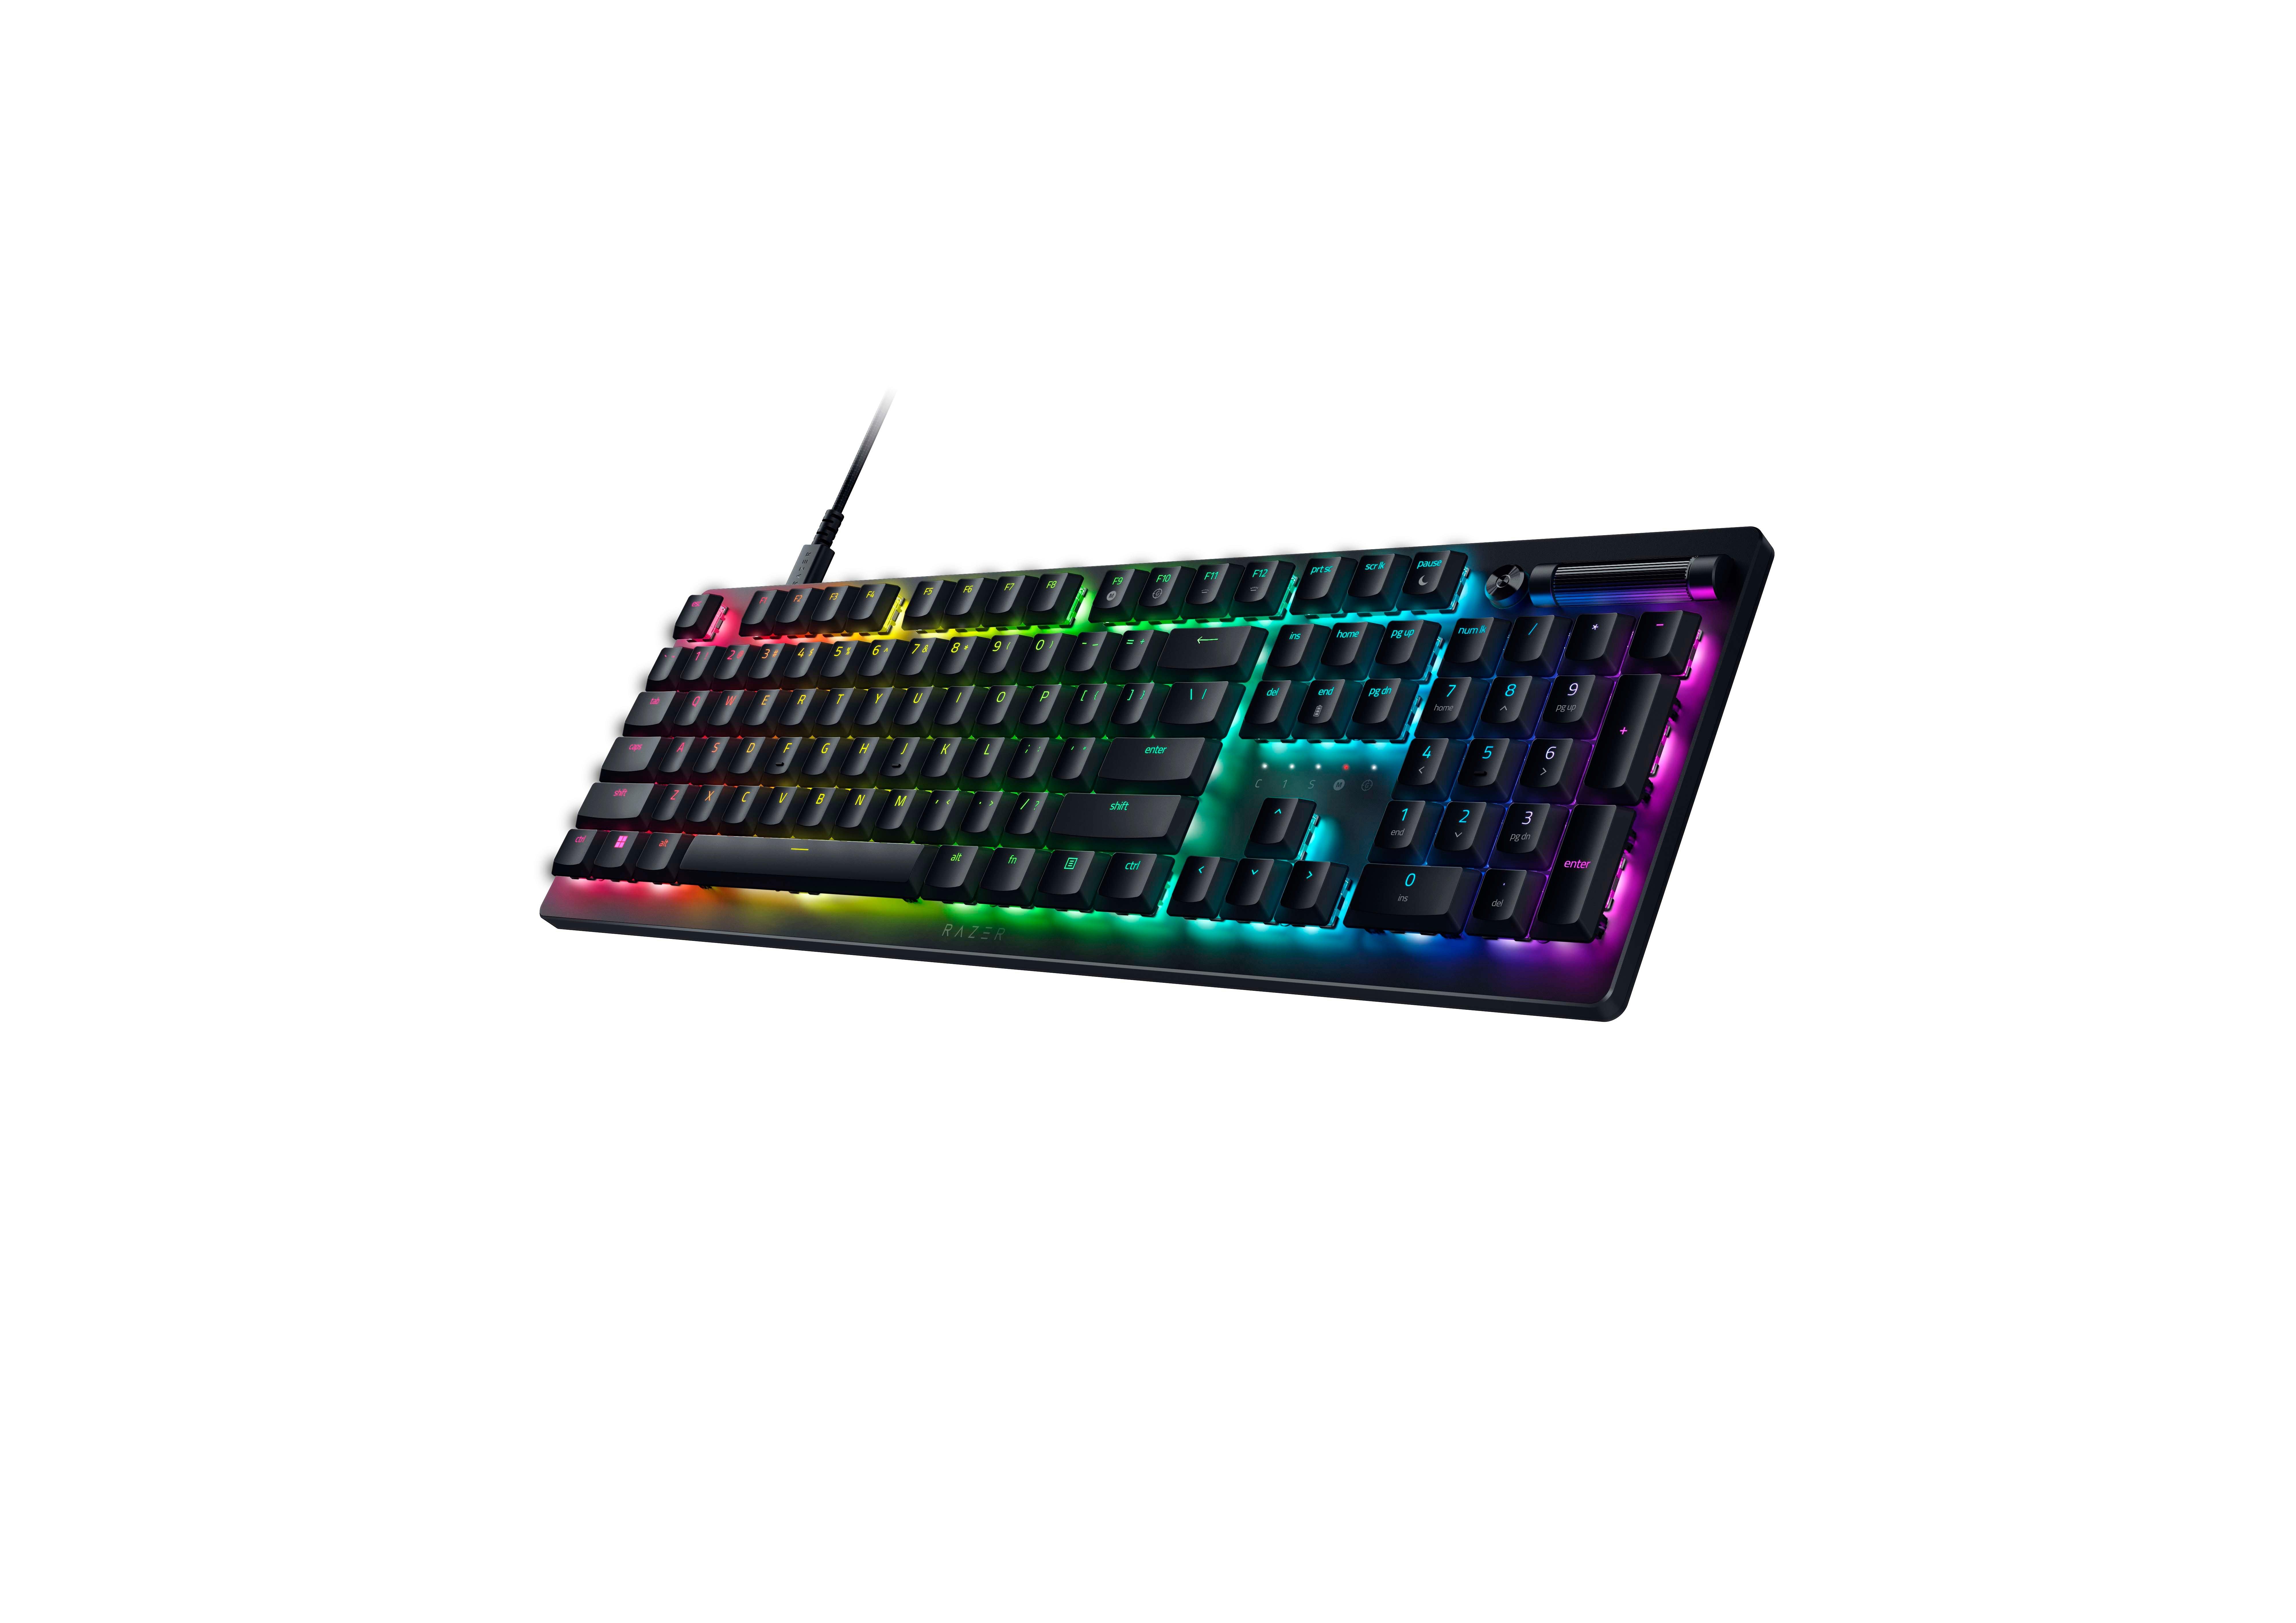 Razer DeathStalker V2 Low-Profile Gaming Keyboard with Optical Linear and RGB Lighting - Black | GameStop